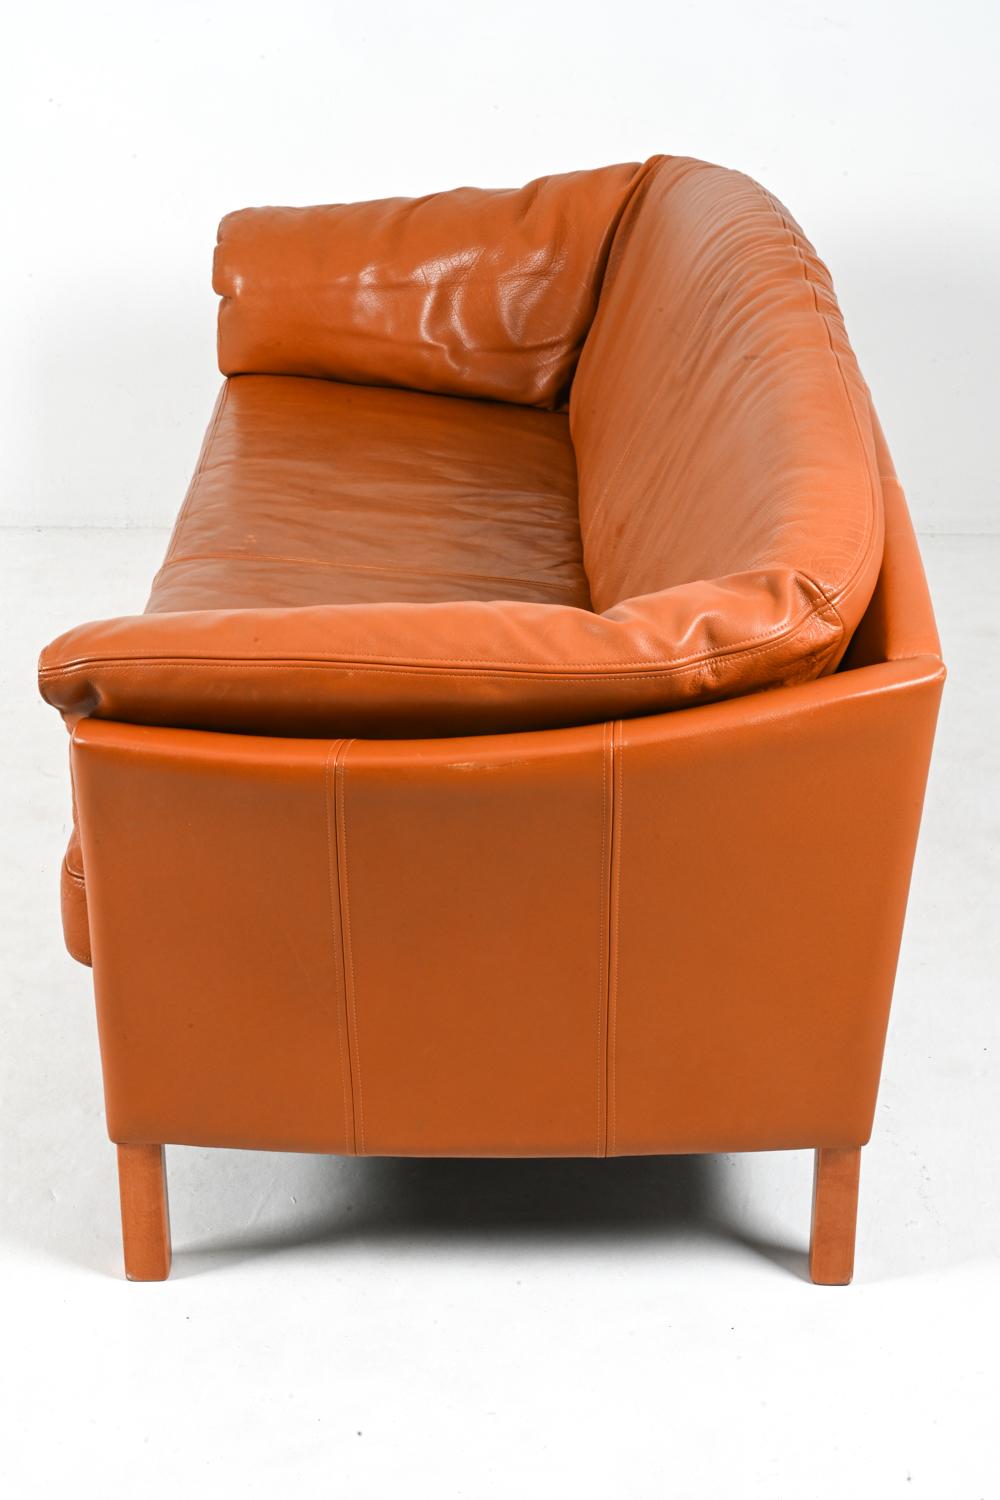 Mogens Hansen Model 535 Danish Modern Three-Seat Sofa in Leather & Oak For Sale 9